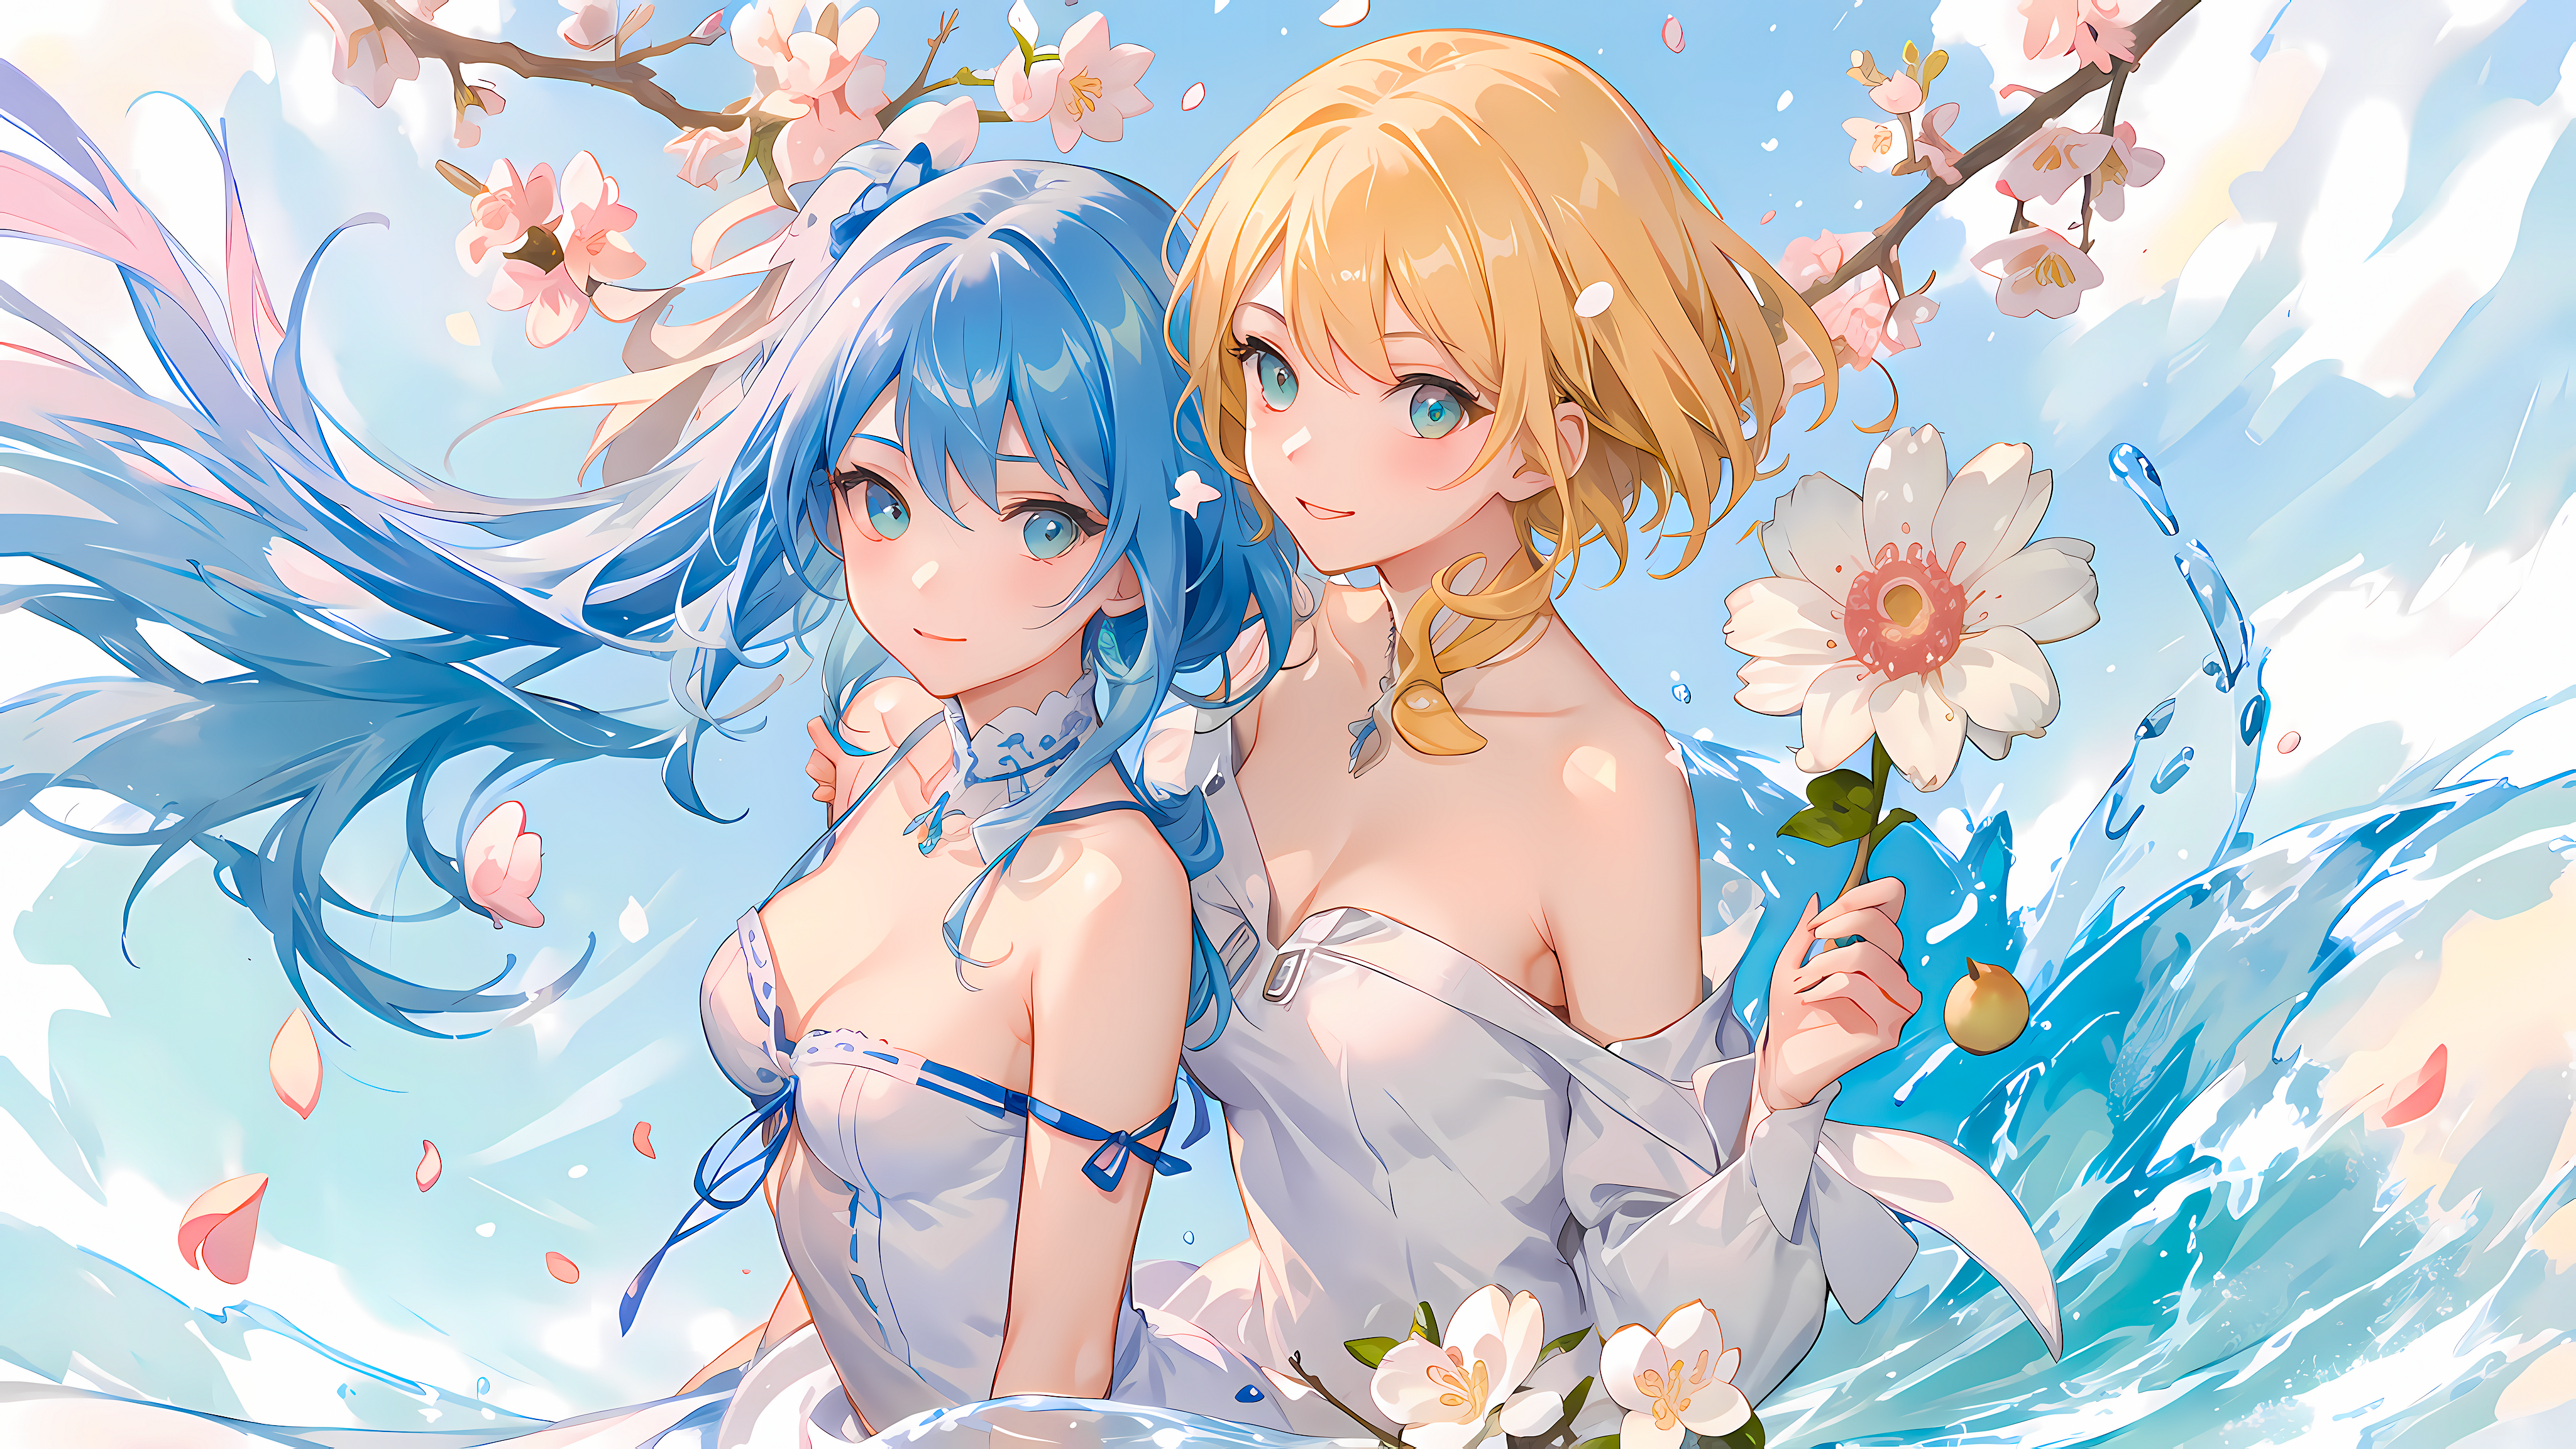 Anime 4098x2305 AI art blue hair flower in hair skirt Plum blossom anime girls water petals flowers smiling long hair short hair looking at viewer